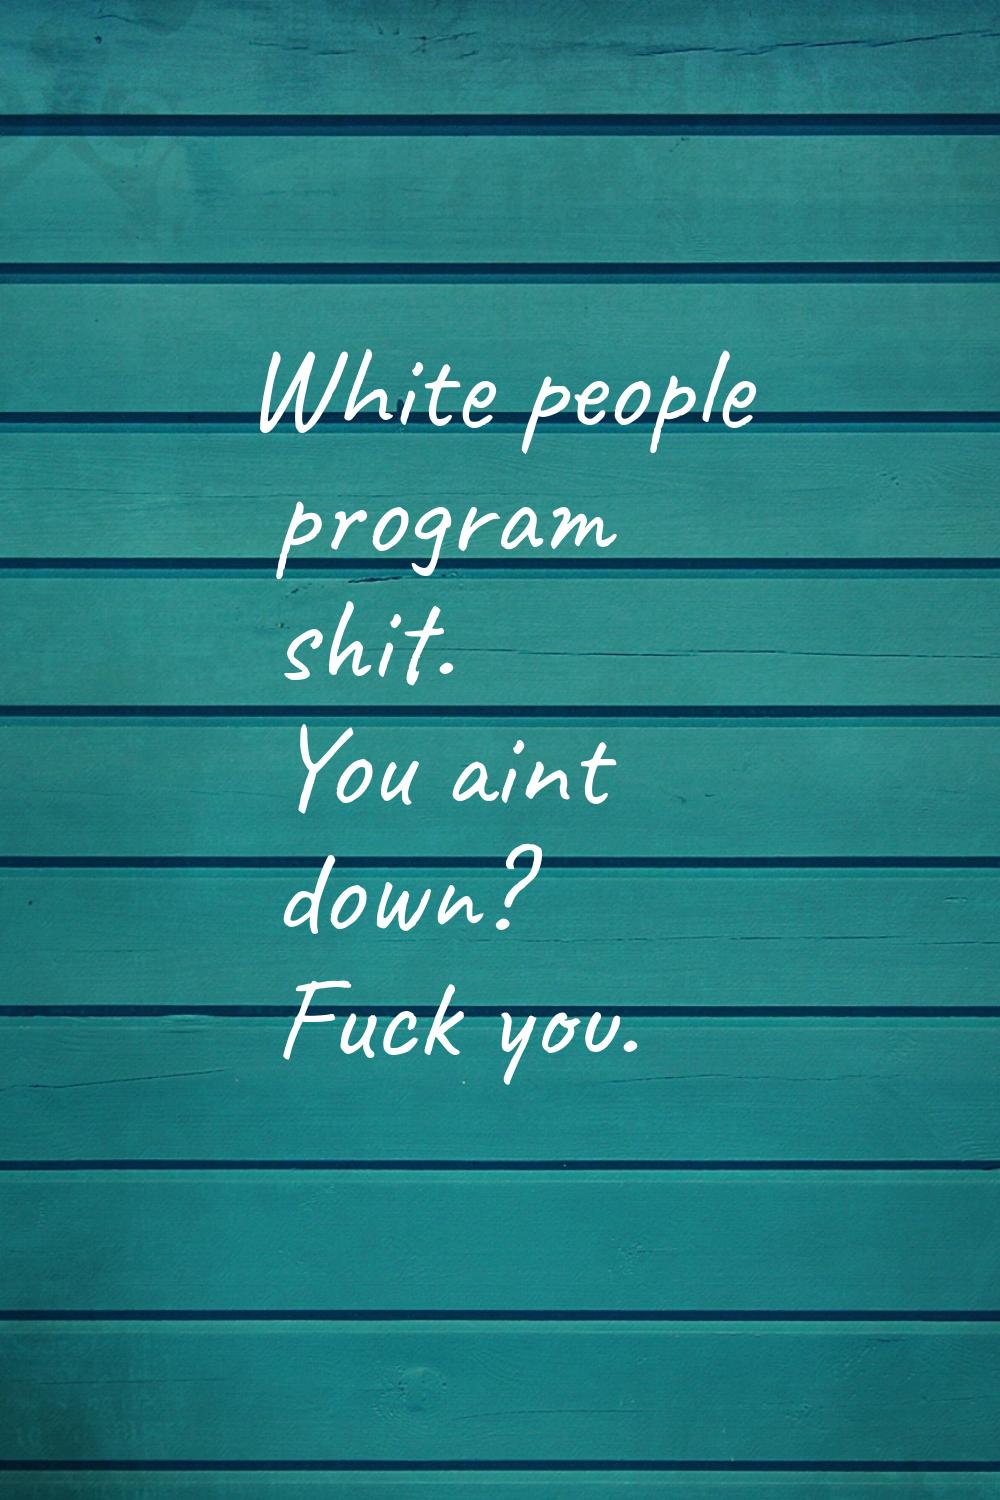 White people program shit. You aint down? Fuck you.